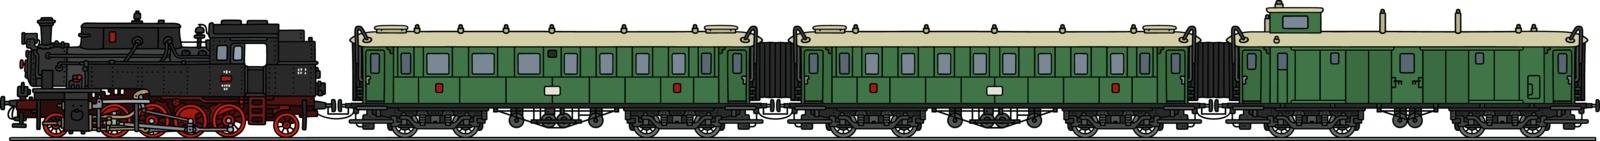 Classic steam train by vostal